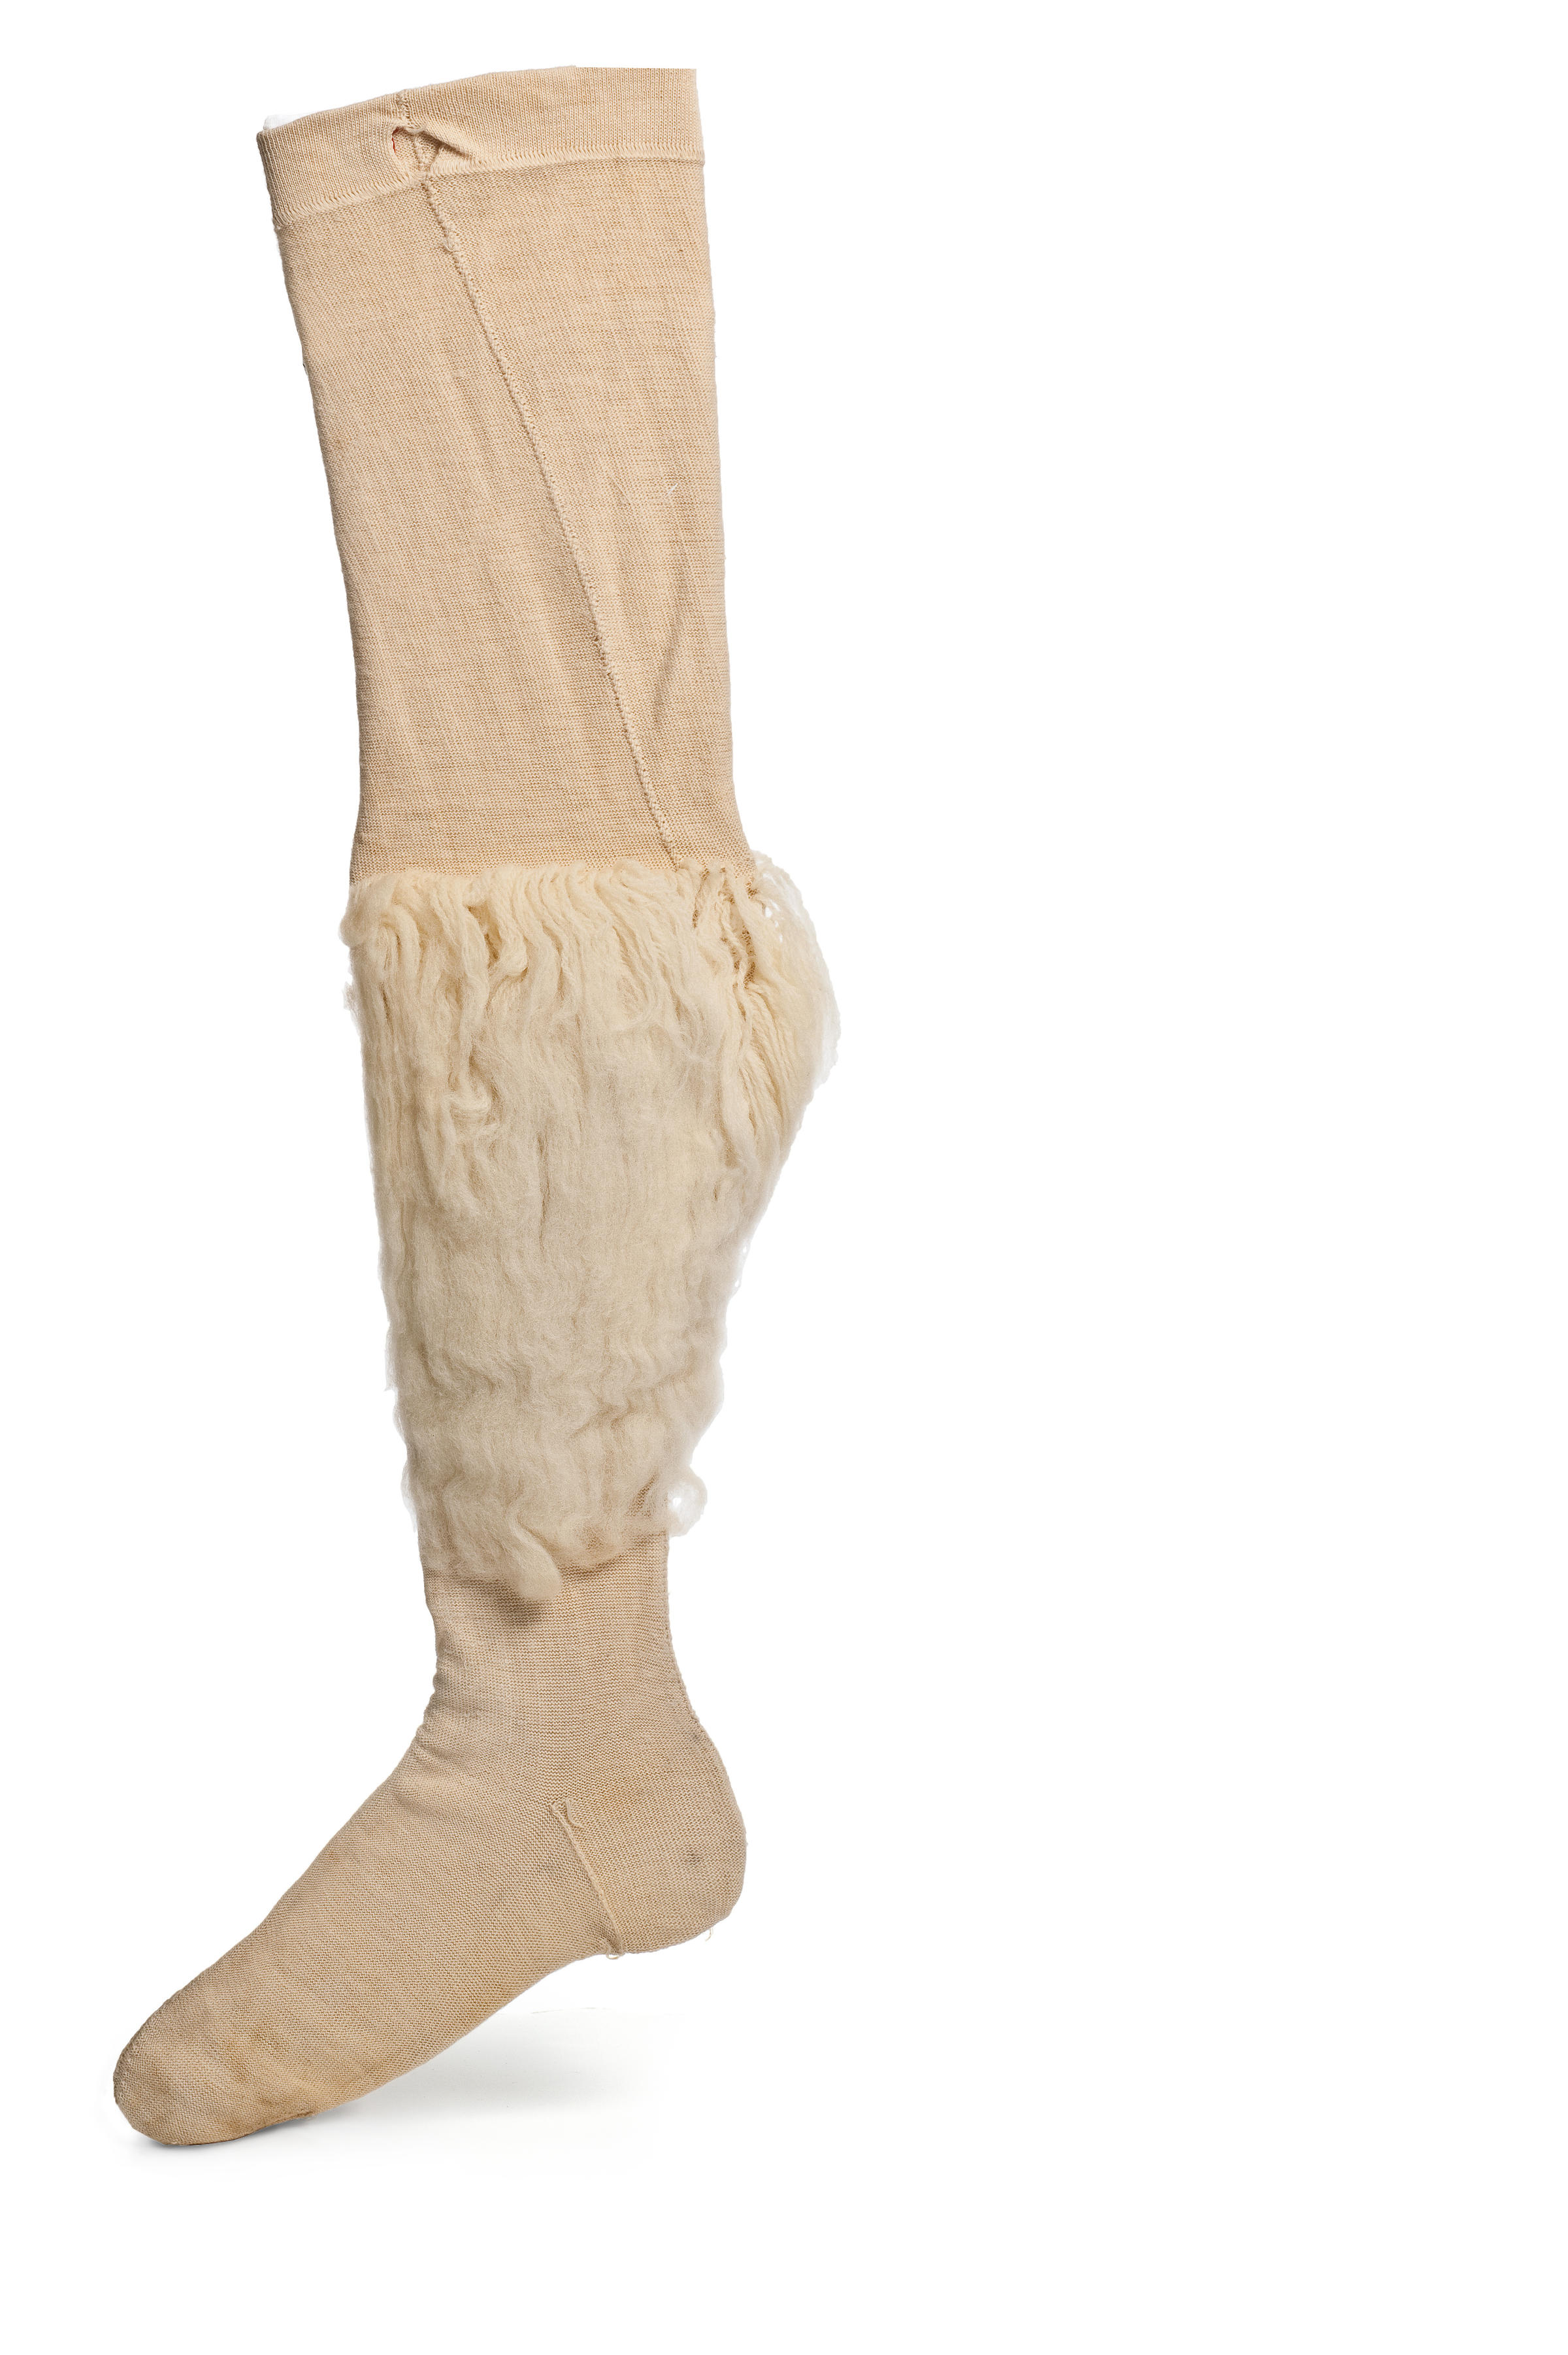 padded stockings